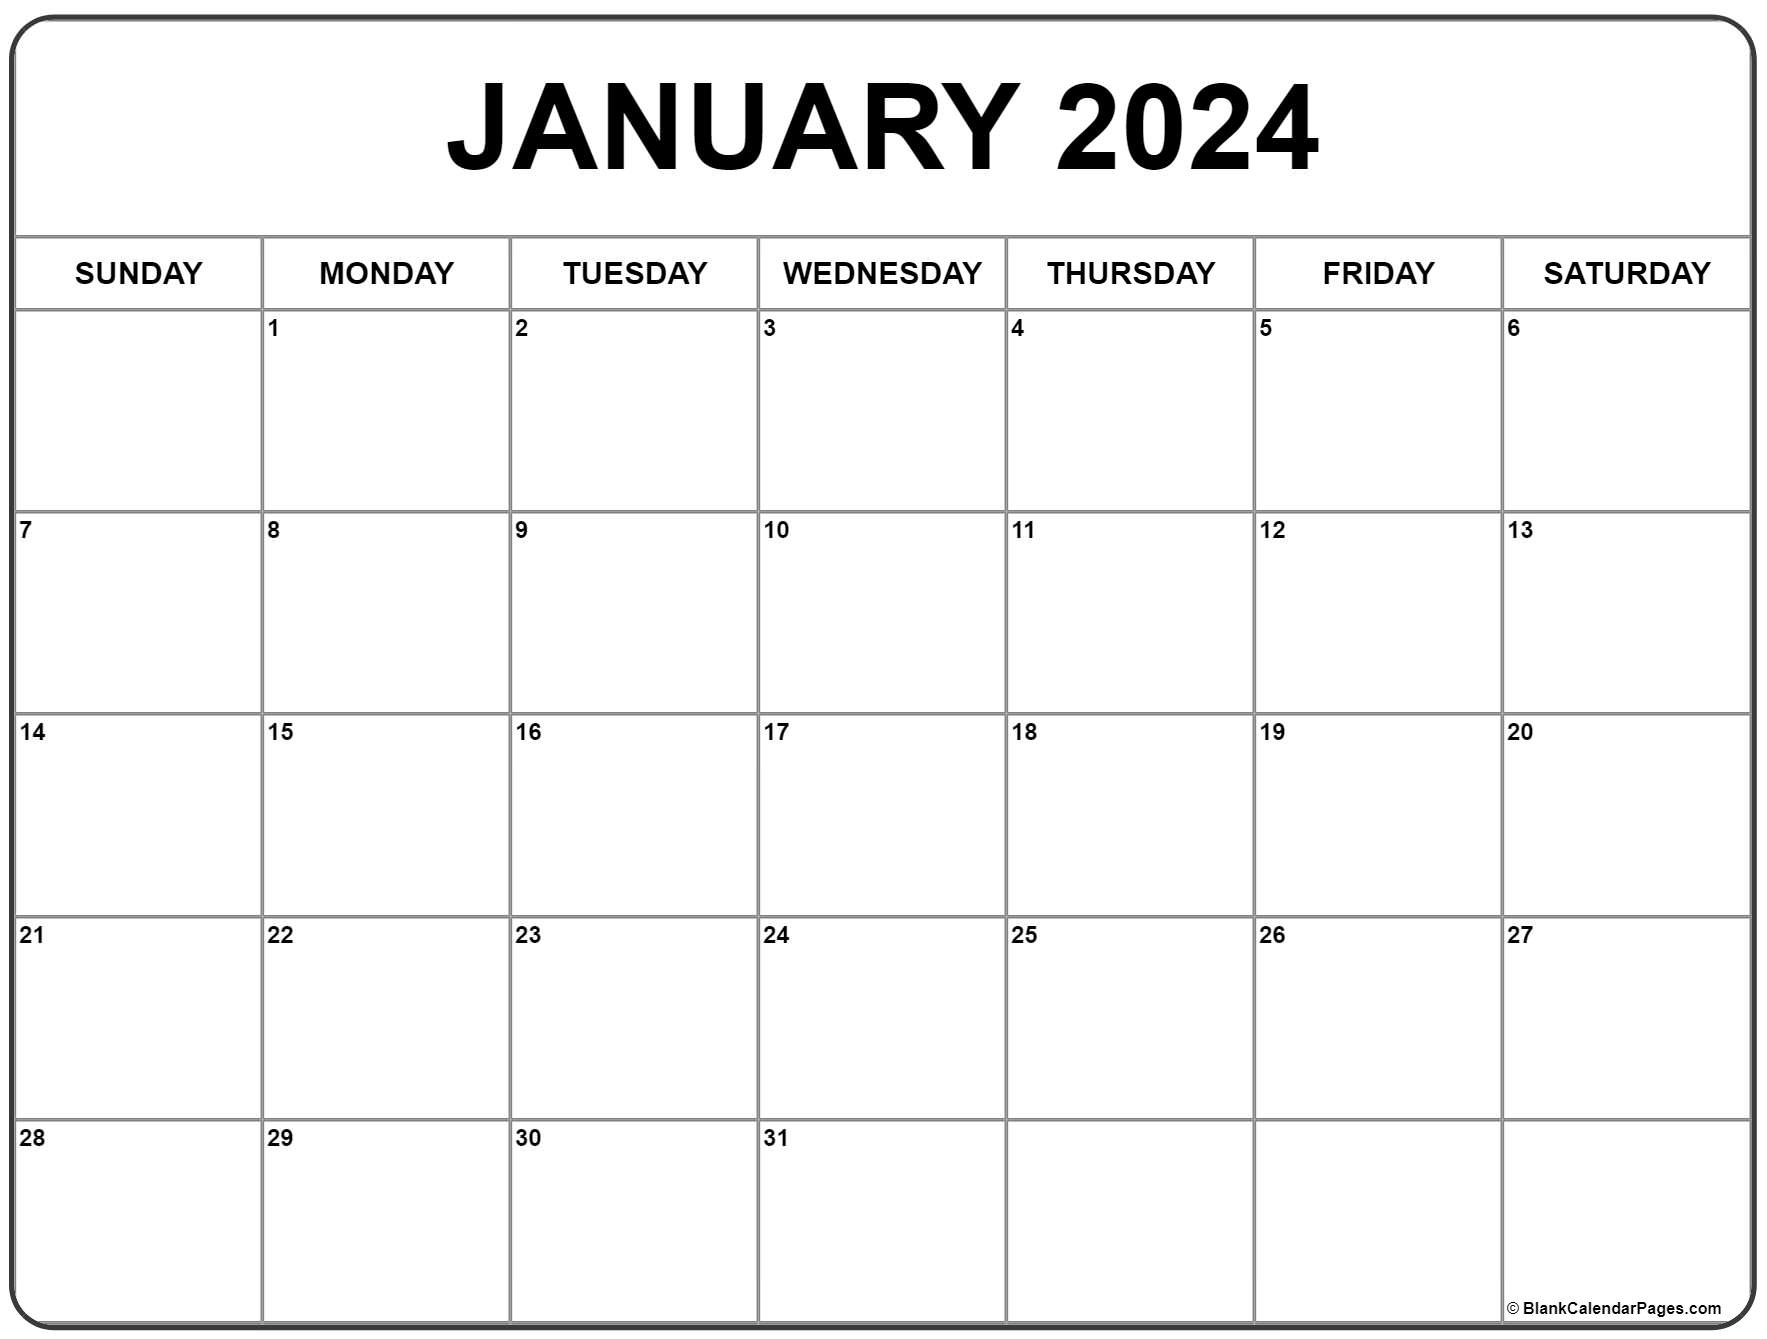 January 2024 Calendar | Free Printable Calendar for 2024 Calendar Printable By Month